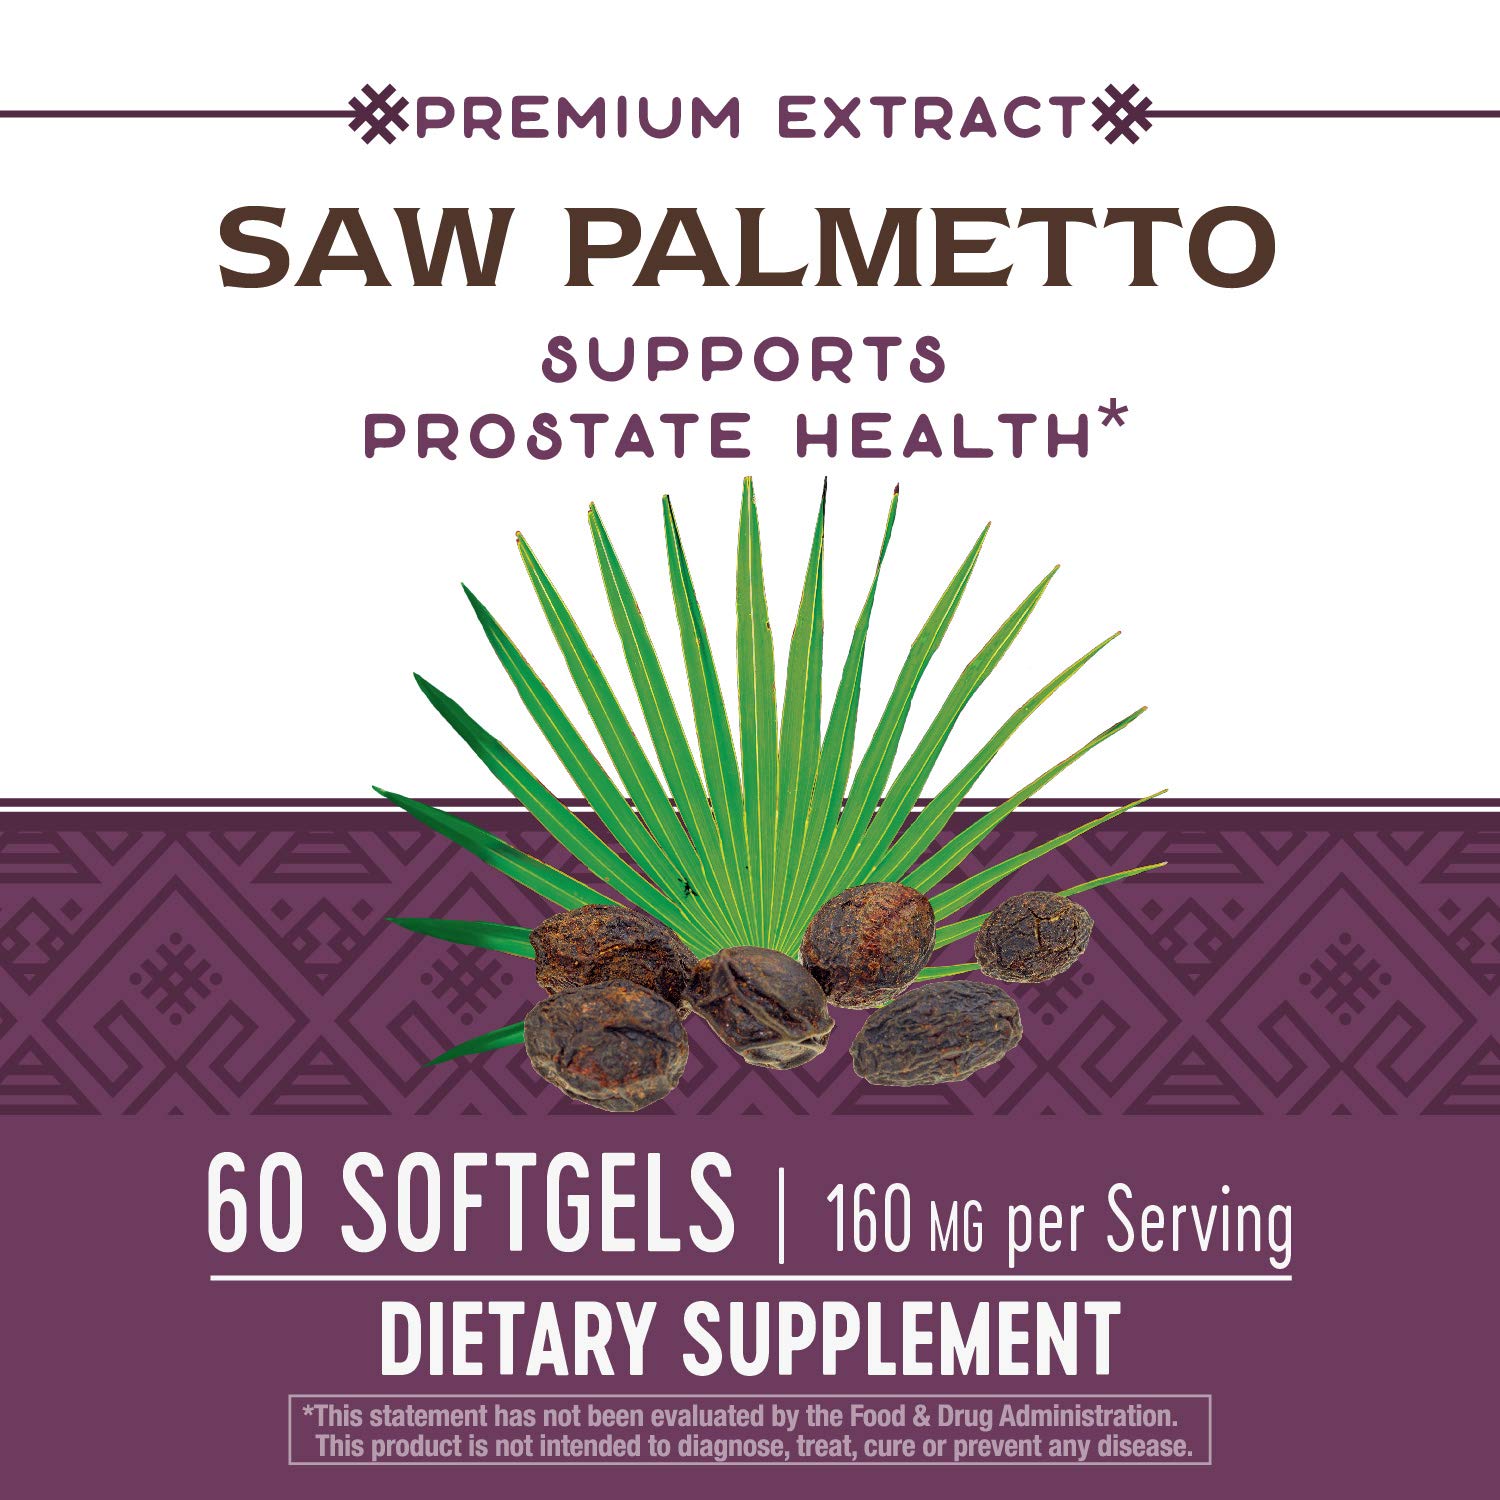 Nature's Way Saw Palmetto, 160 mg per serving, 60 Softgels